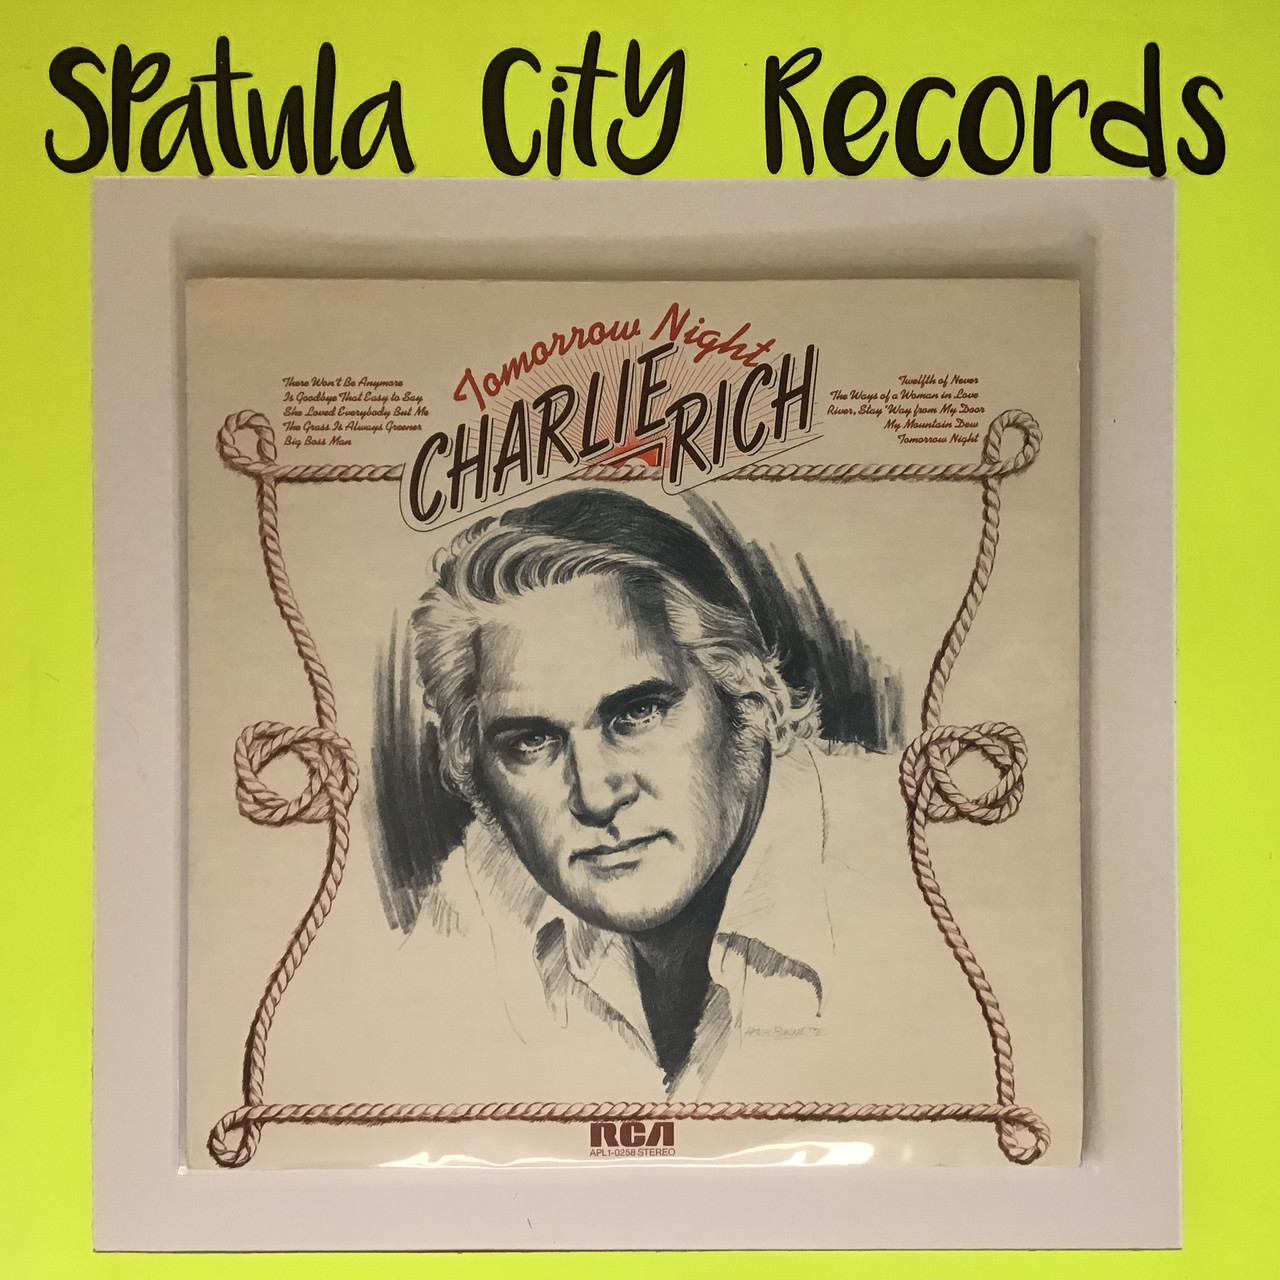 Charlie Rich - Tomorrow Night - vinyl record LP